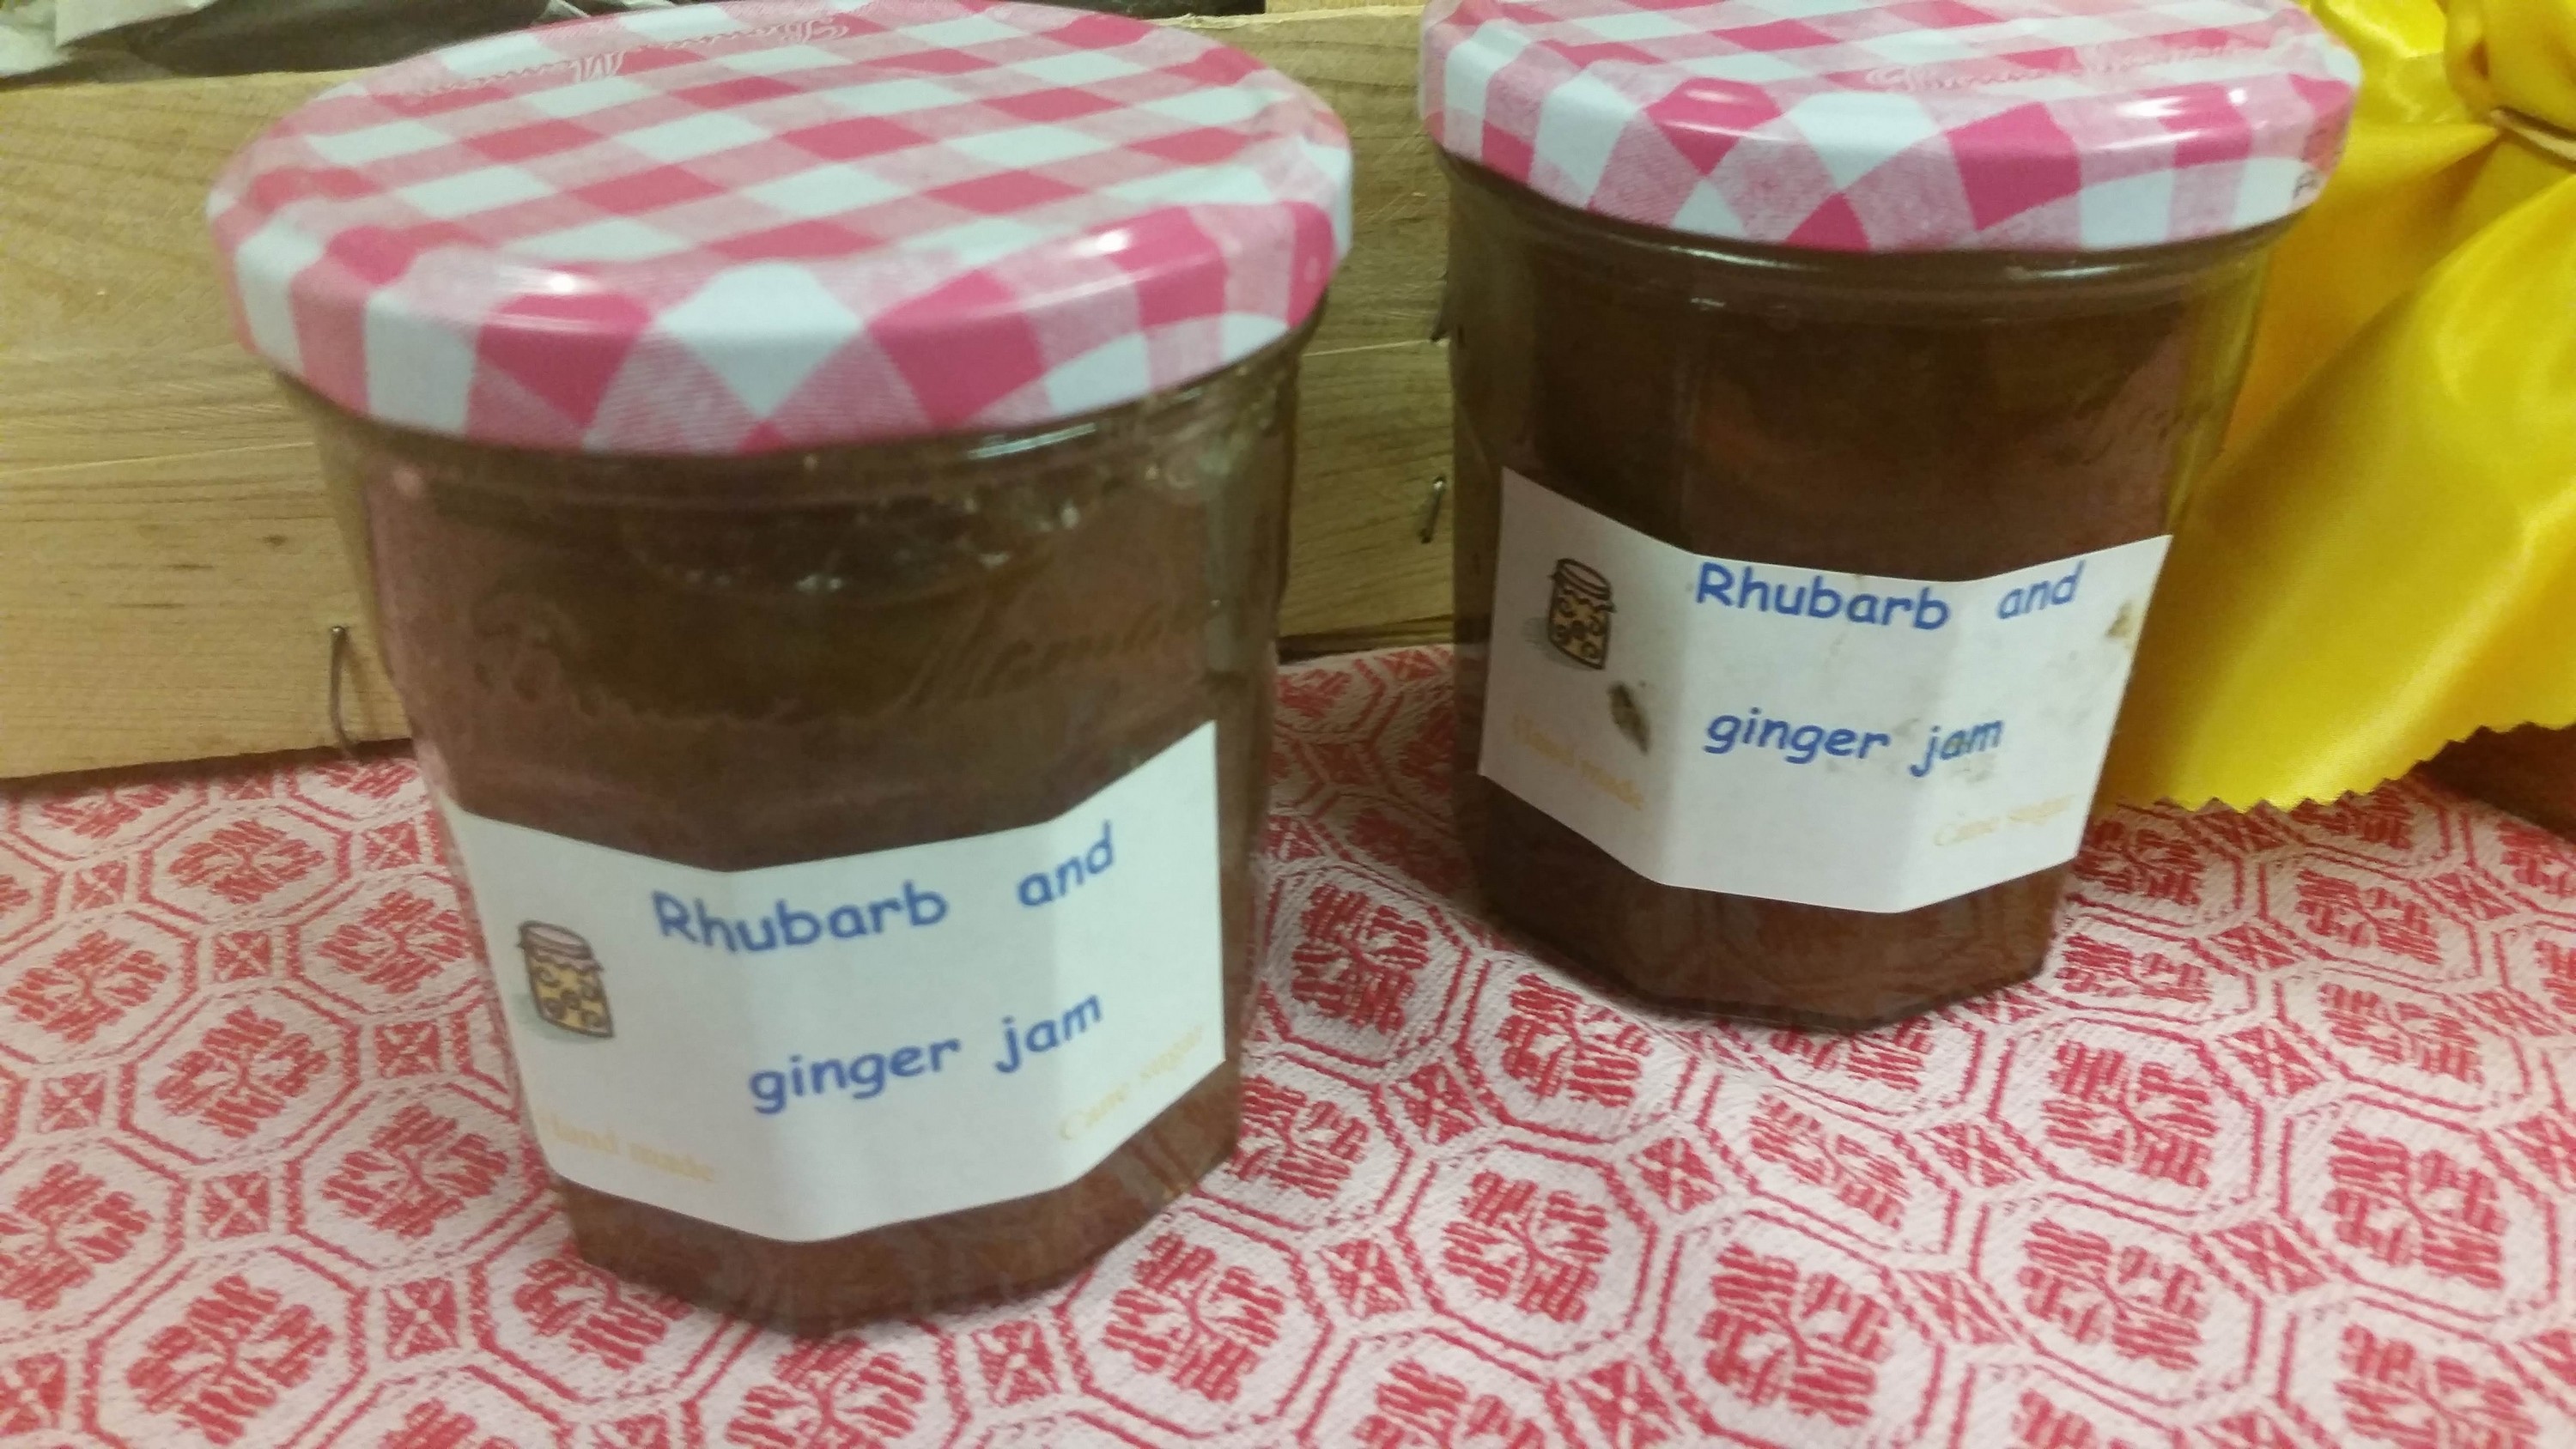 Rhubarb and ginger jam 